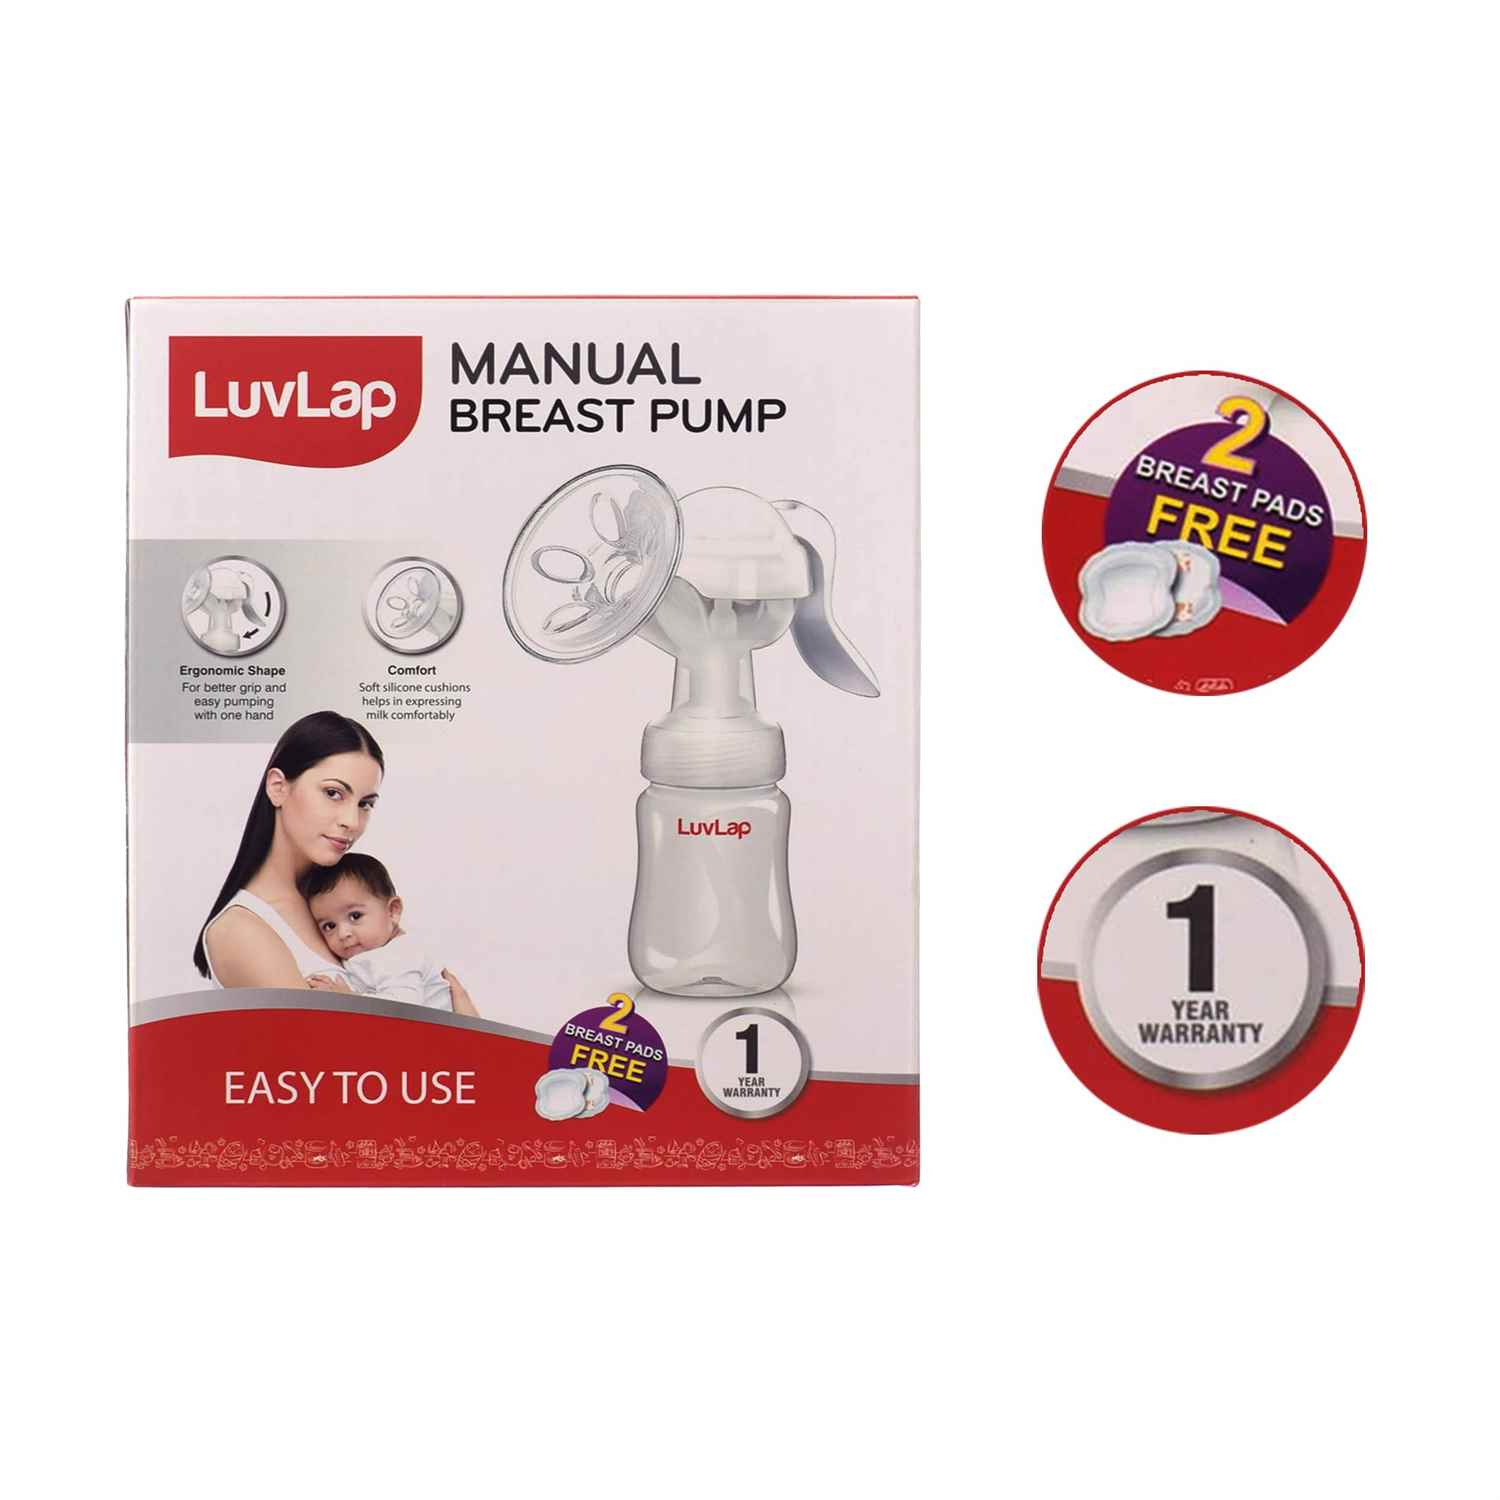 LUVLAP Manual Breast Pump with 2 Breast Pads Free